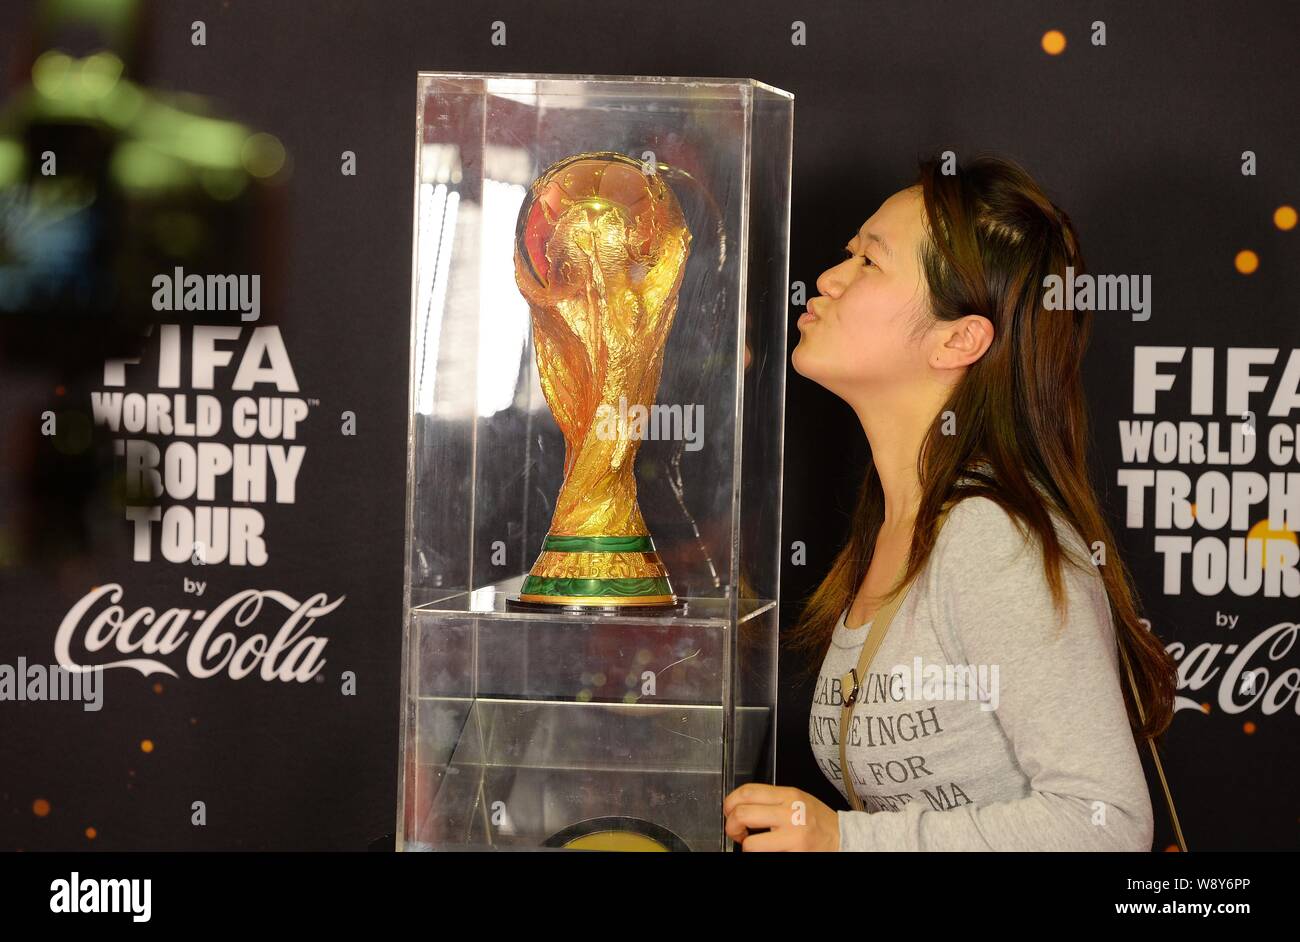 Lot 7 - A 2014 FIFA World Cup Final Mini Trophy